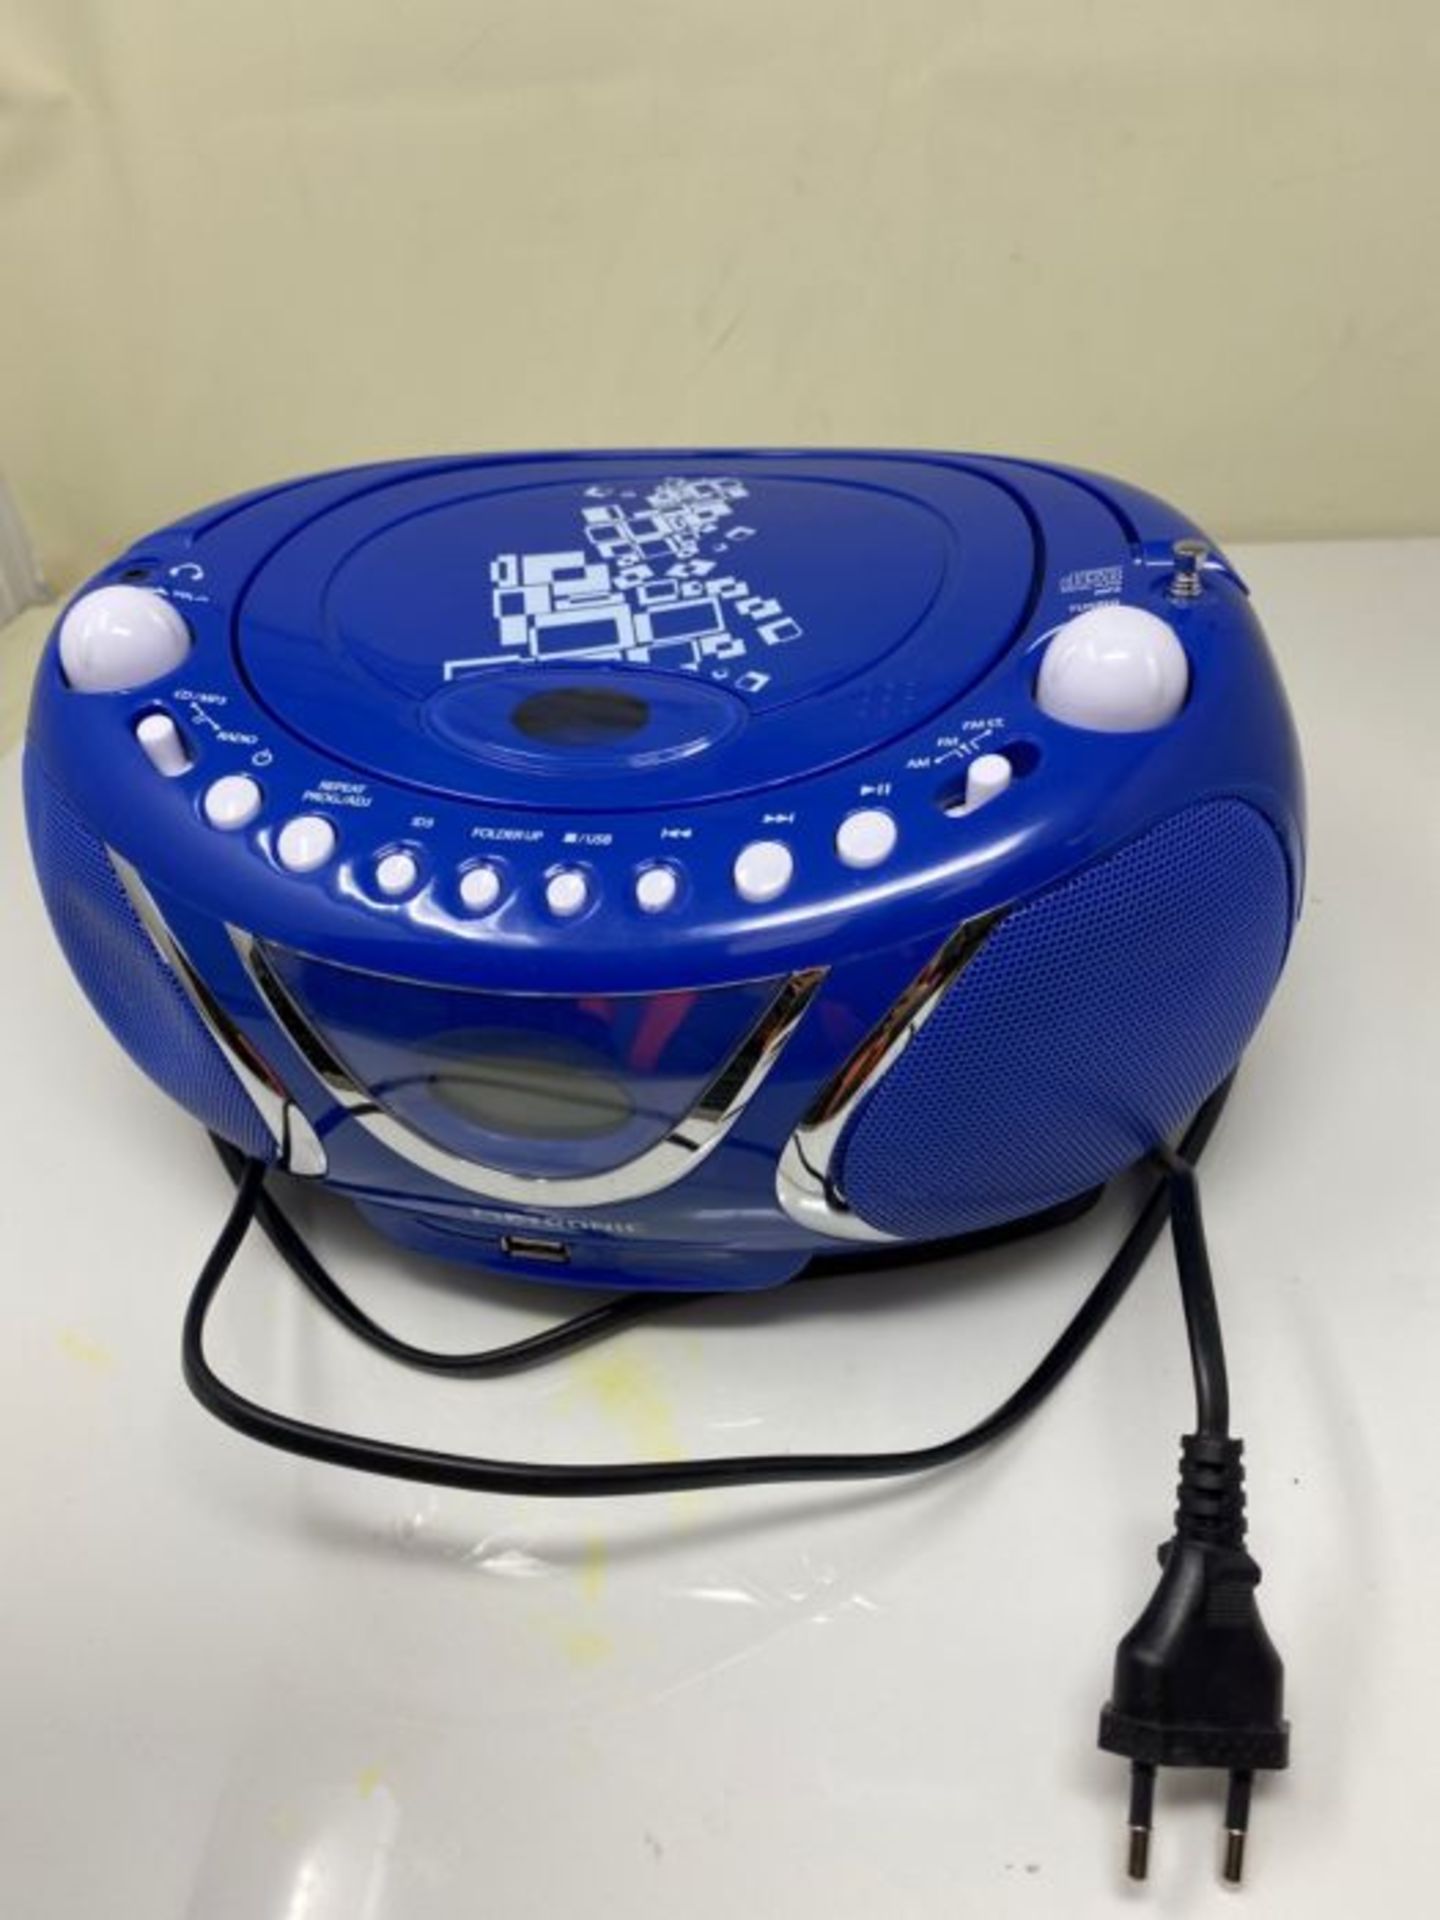 Metronic Gulli Radio/CD Player / MP3 Portable blue - Image 2 of 2